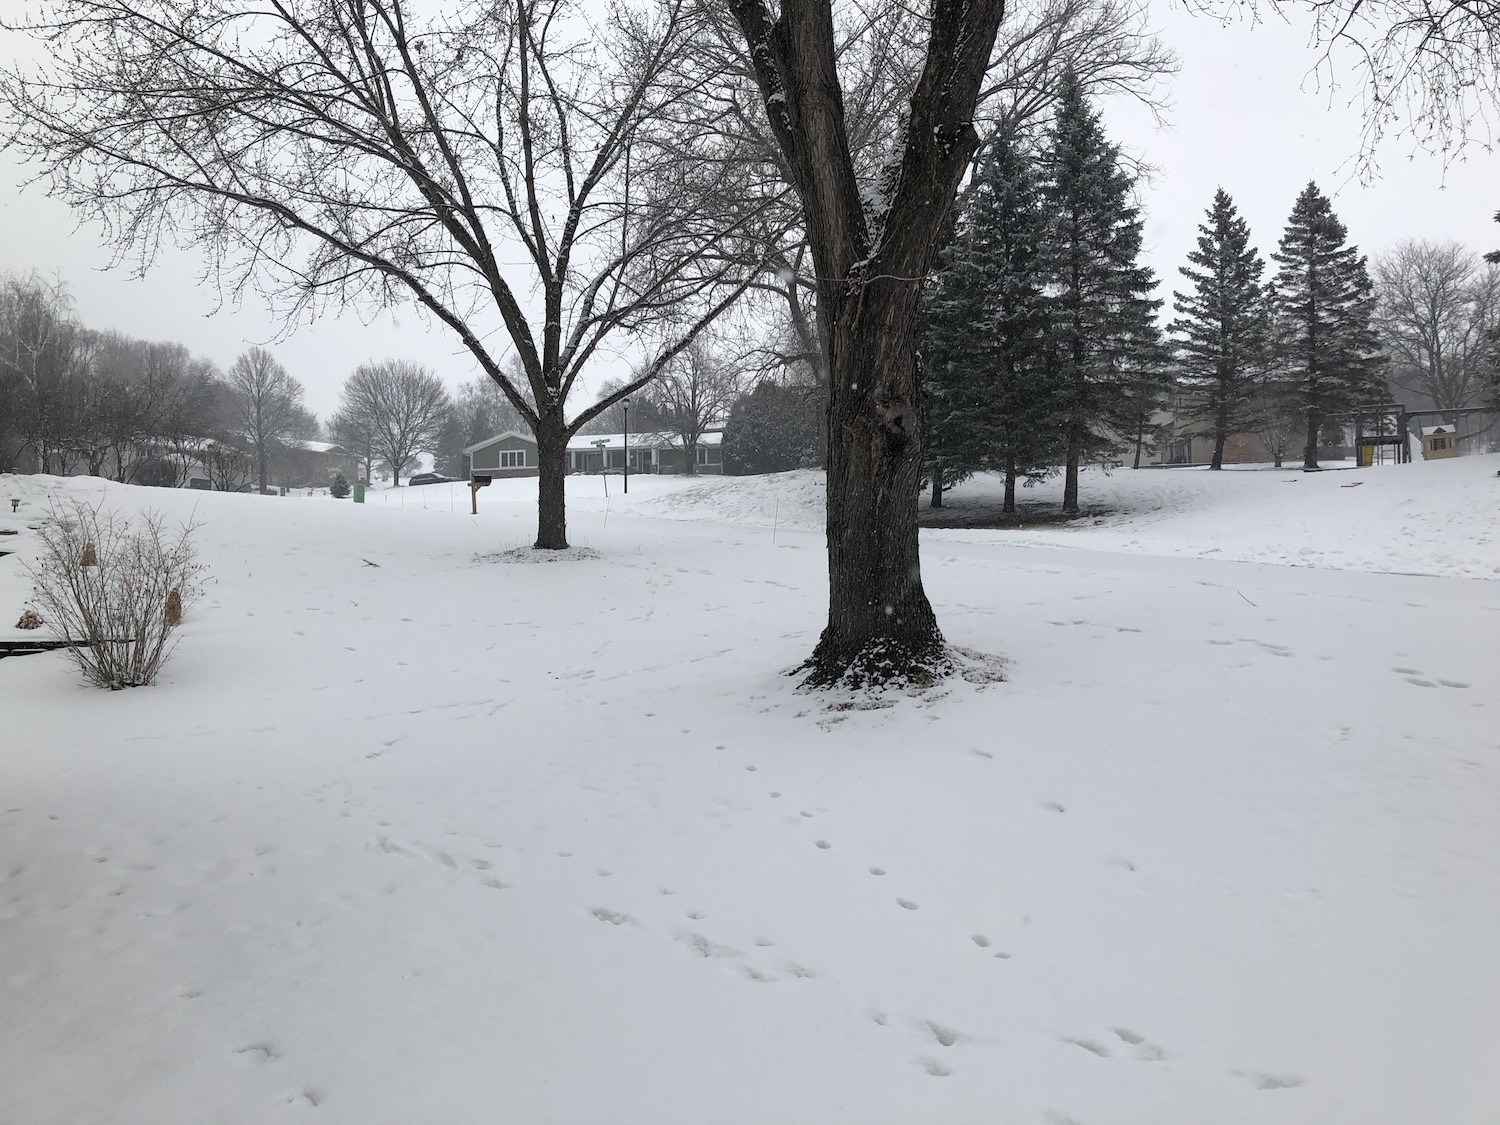 Snowy groundcover in Minnesota